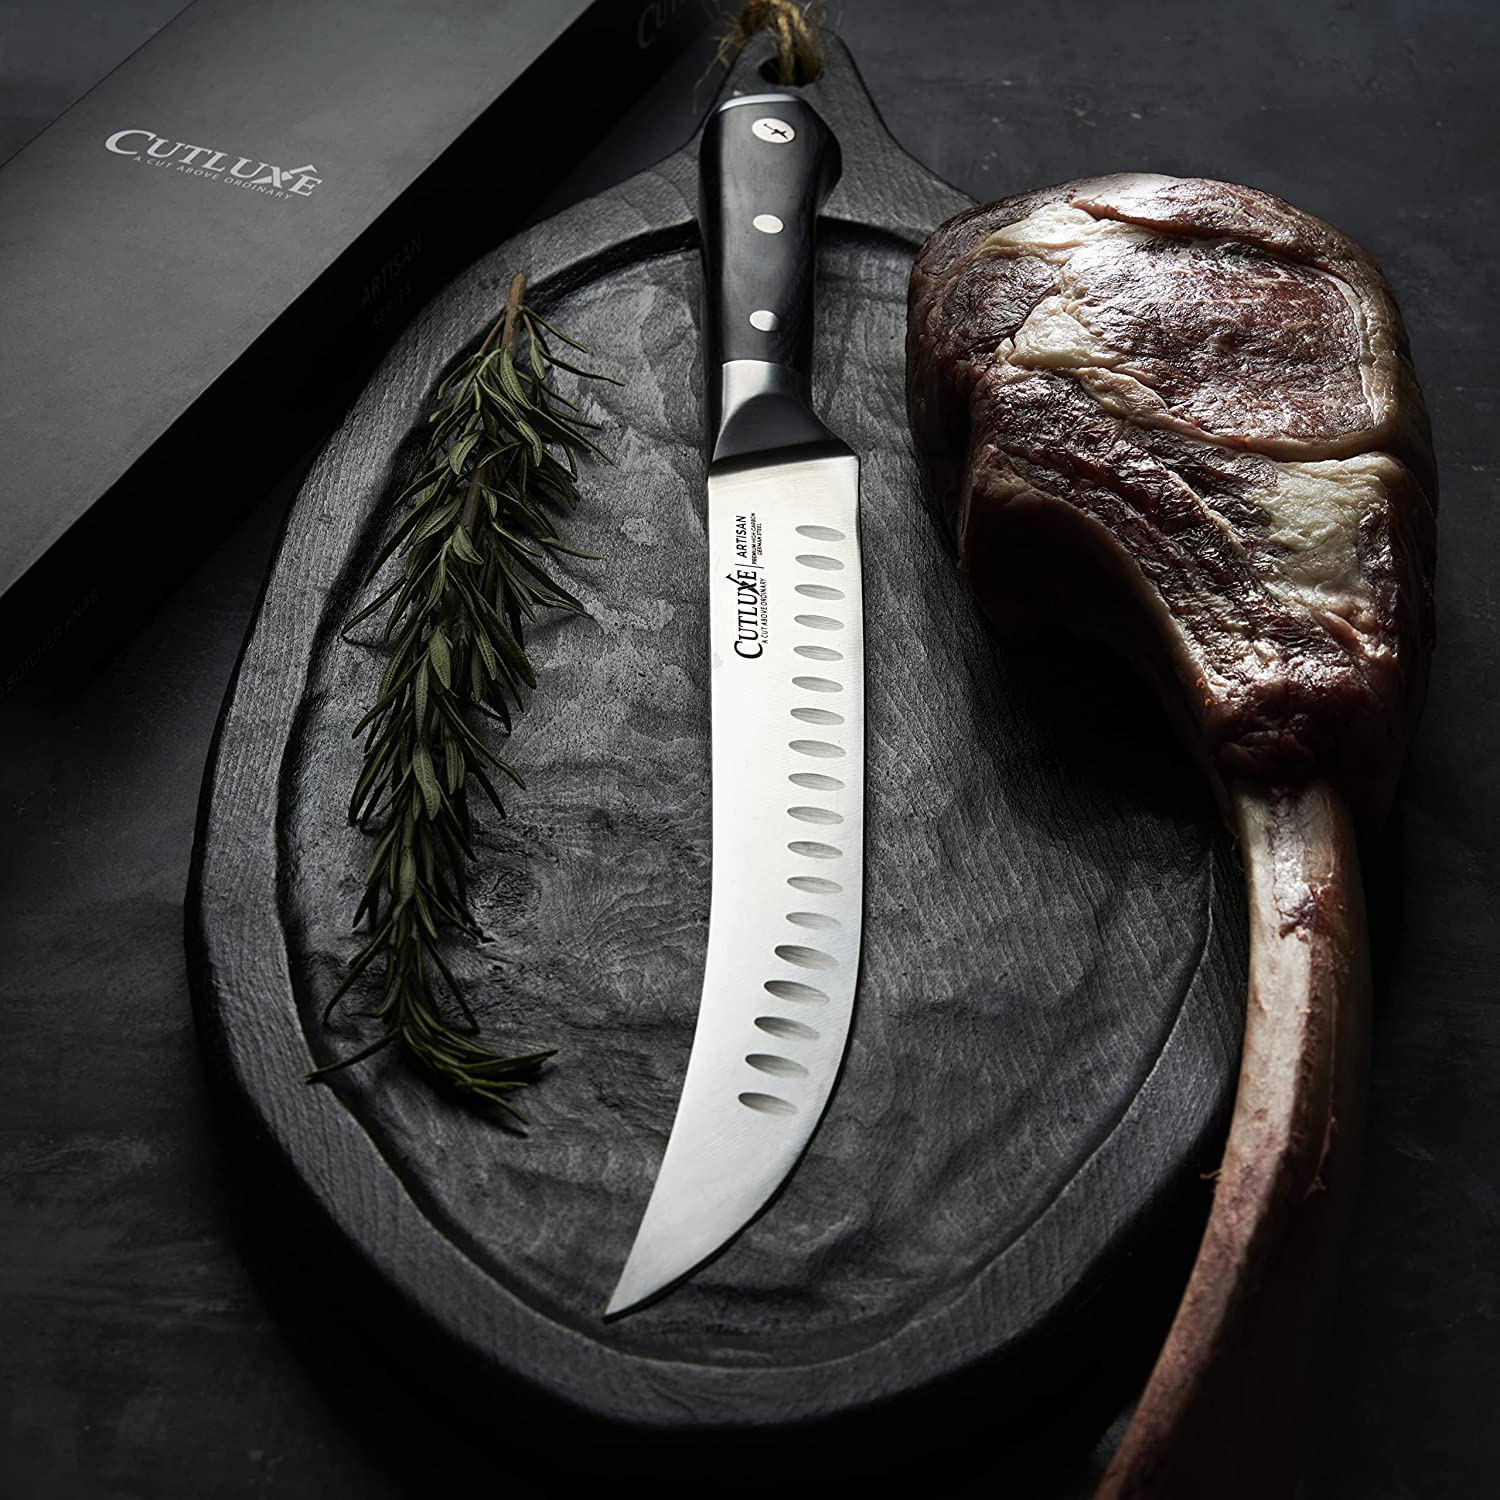 Cutluxe's Bullnose Butcher Knife Slices Through Even the Toughest Produce